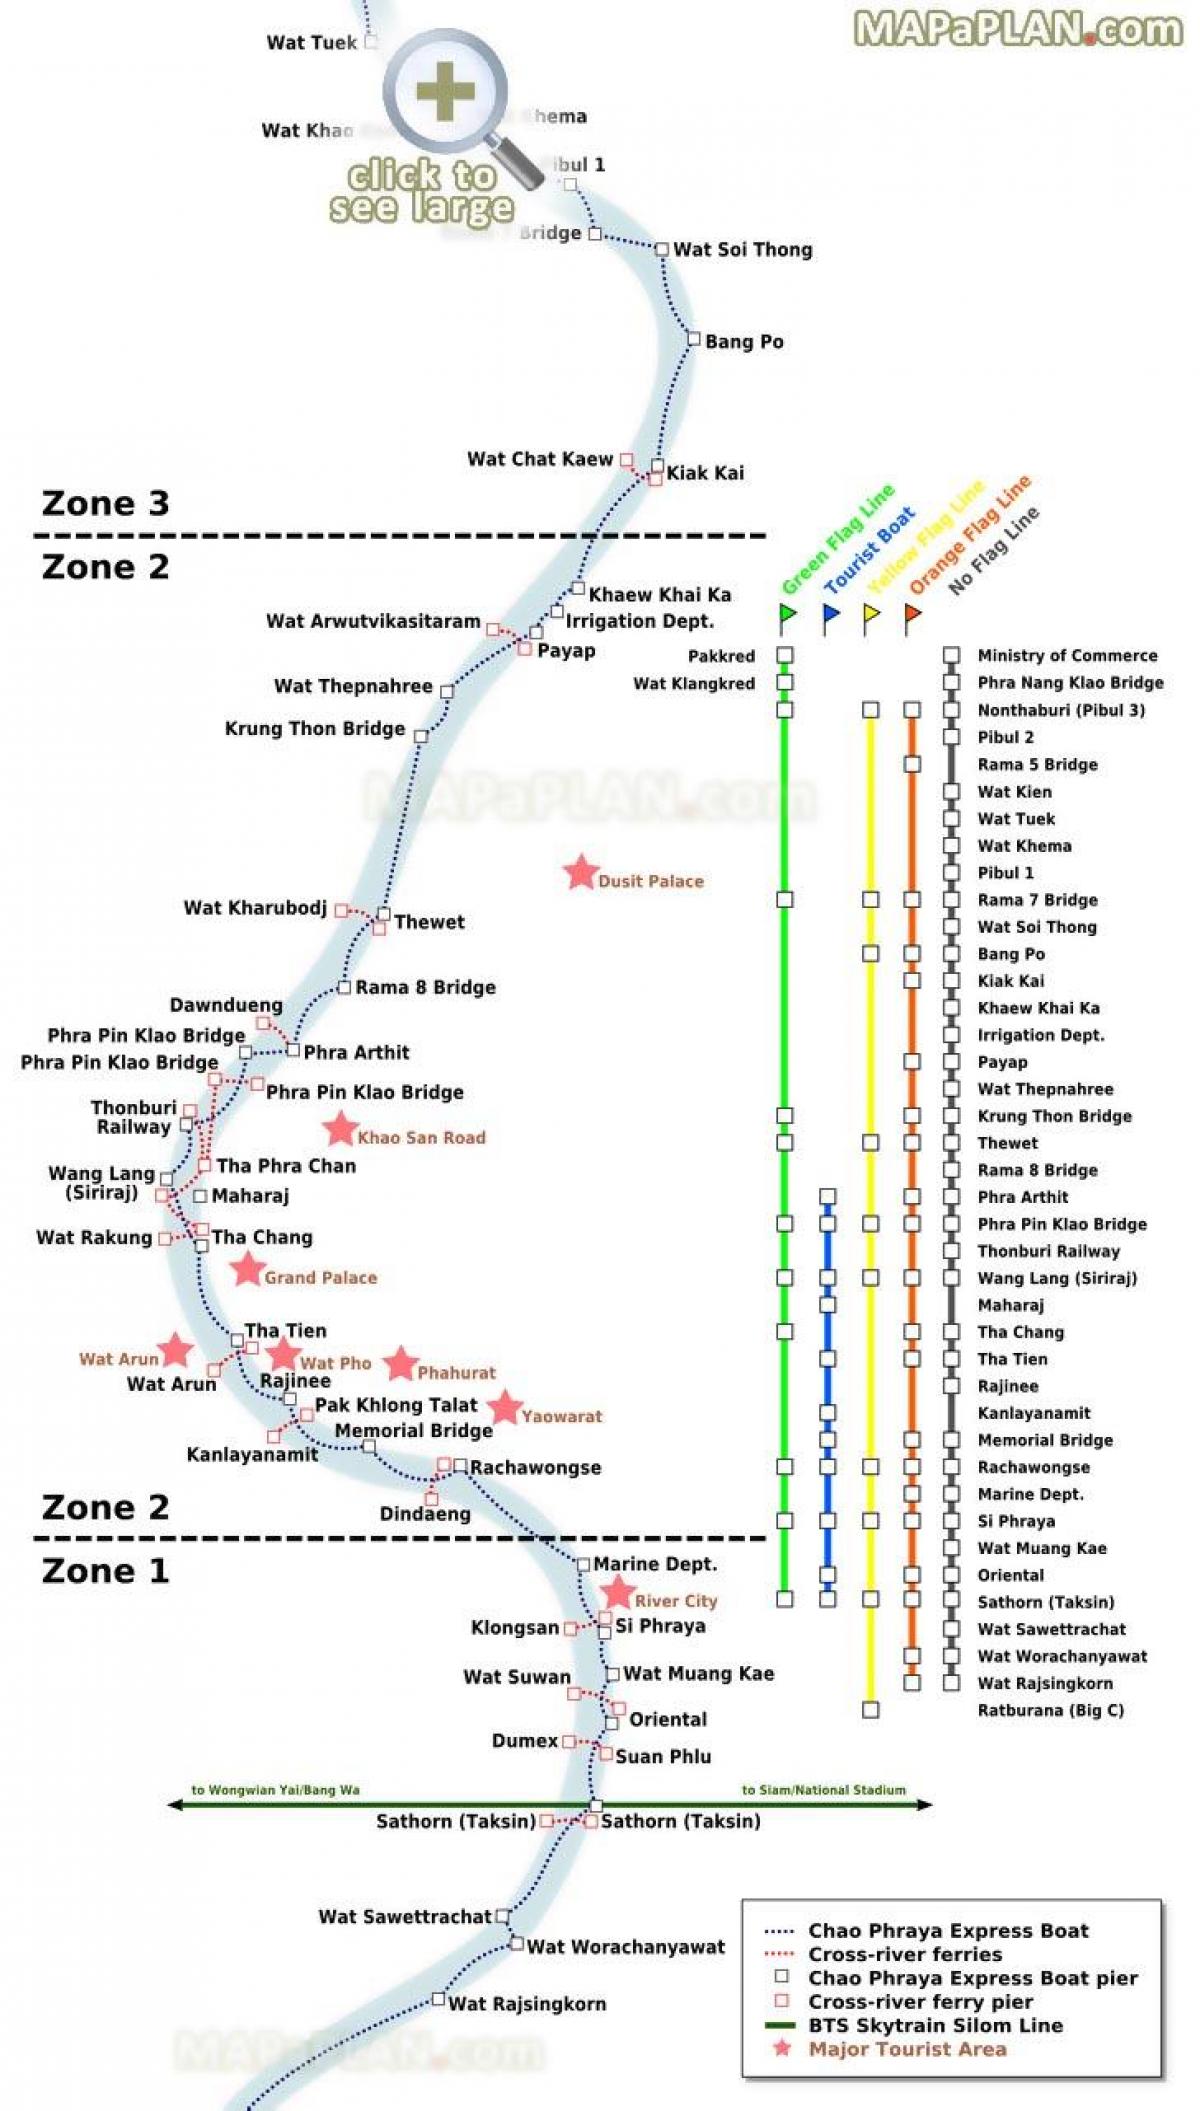 bangkok feribot hartă